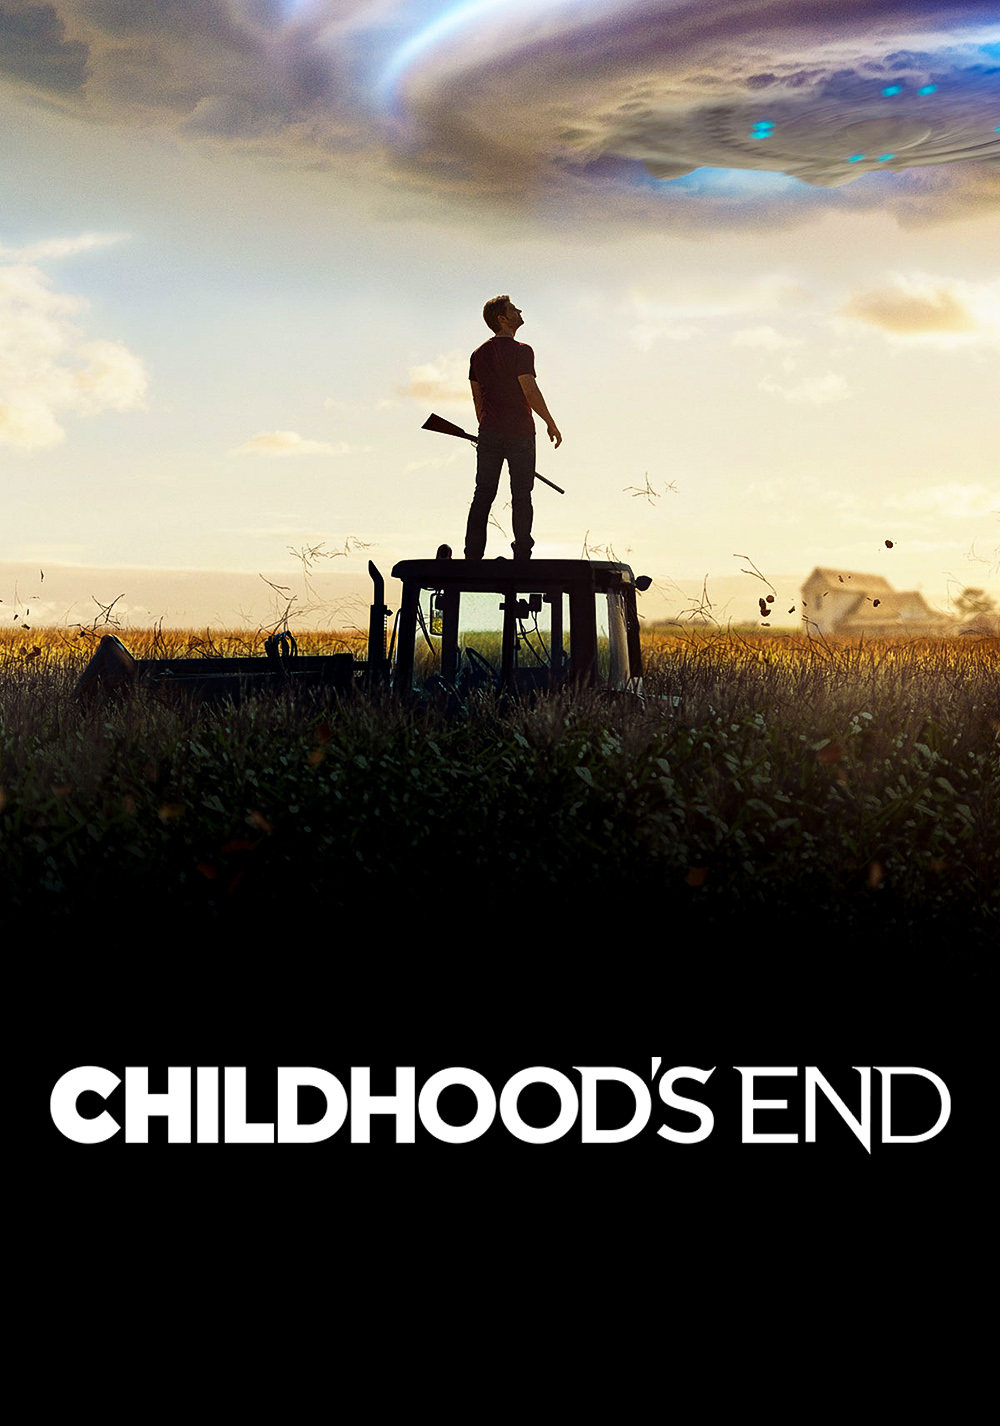 childhoods-end